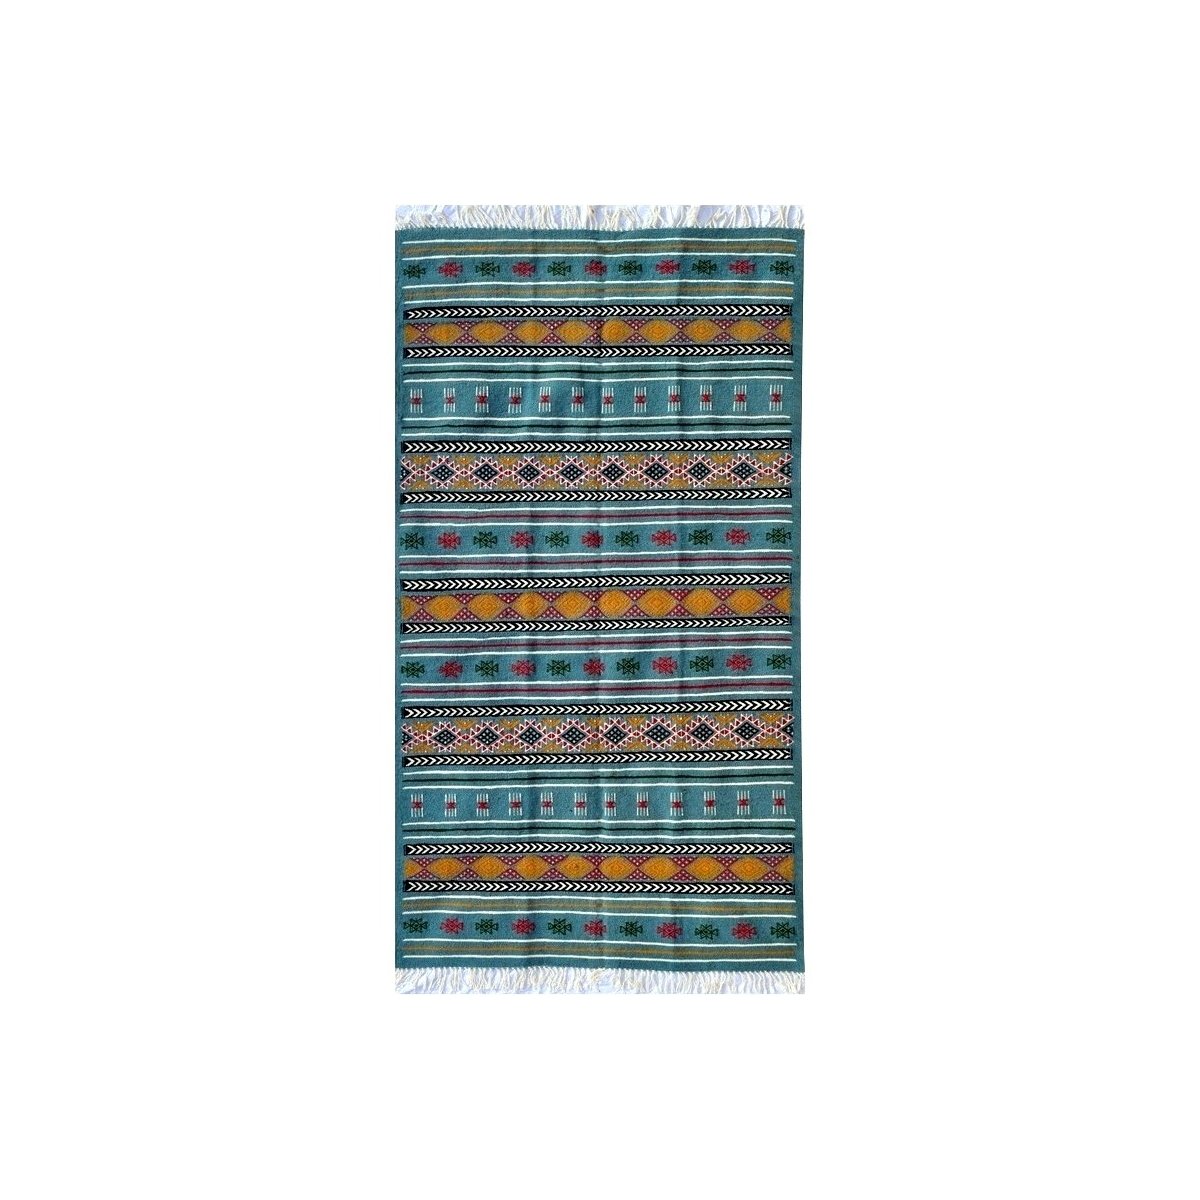 Berber tapijt Tapijt Kilim Bayen 110x195 Turkoois/Jeel/Rood (Handgeweven, Wol, Tunesië) Tunesisch kilimdeken, Marokkaanse stijl.